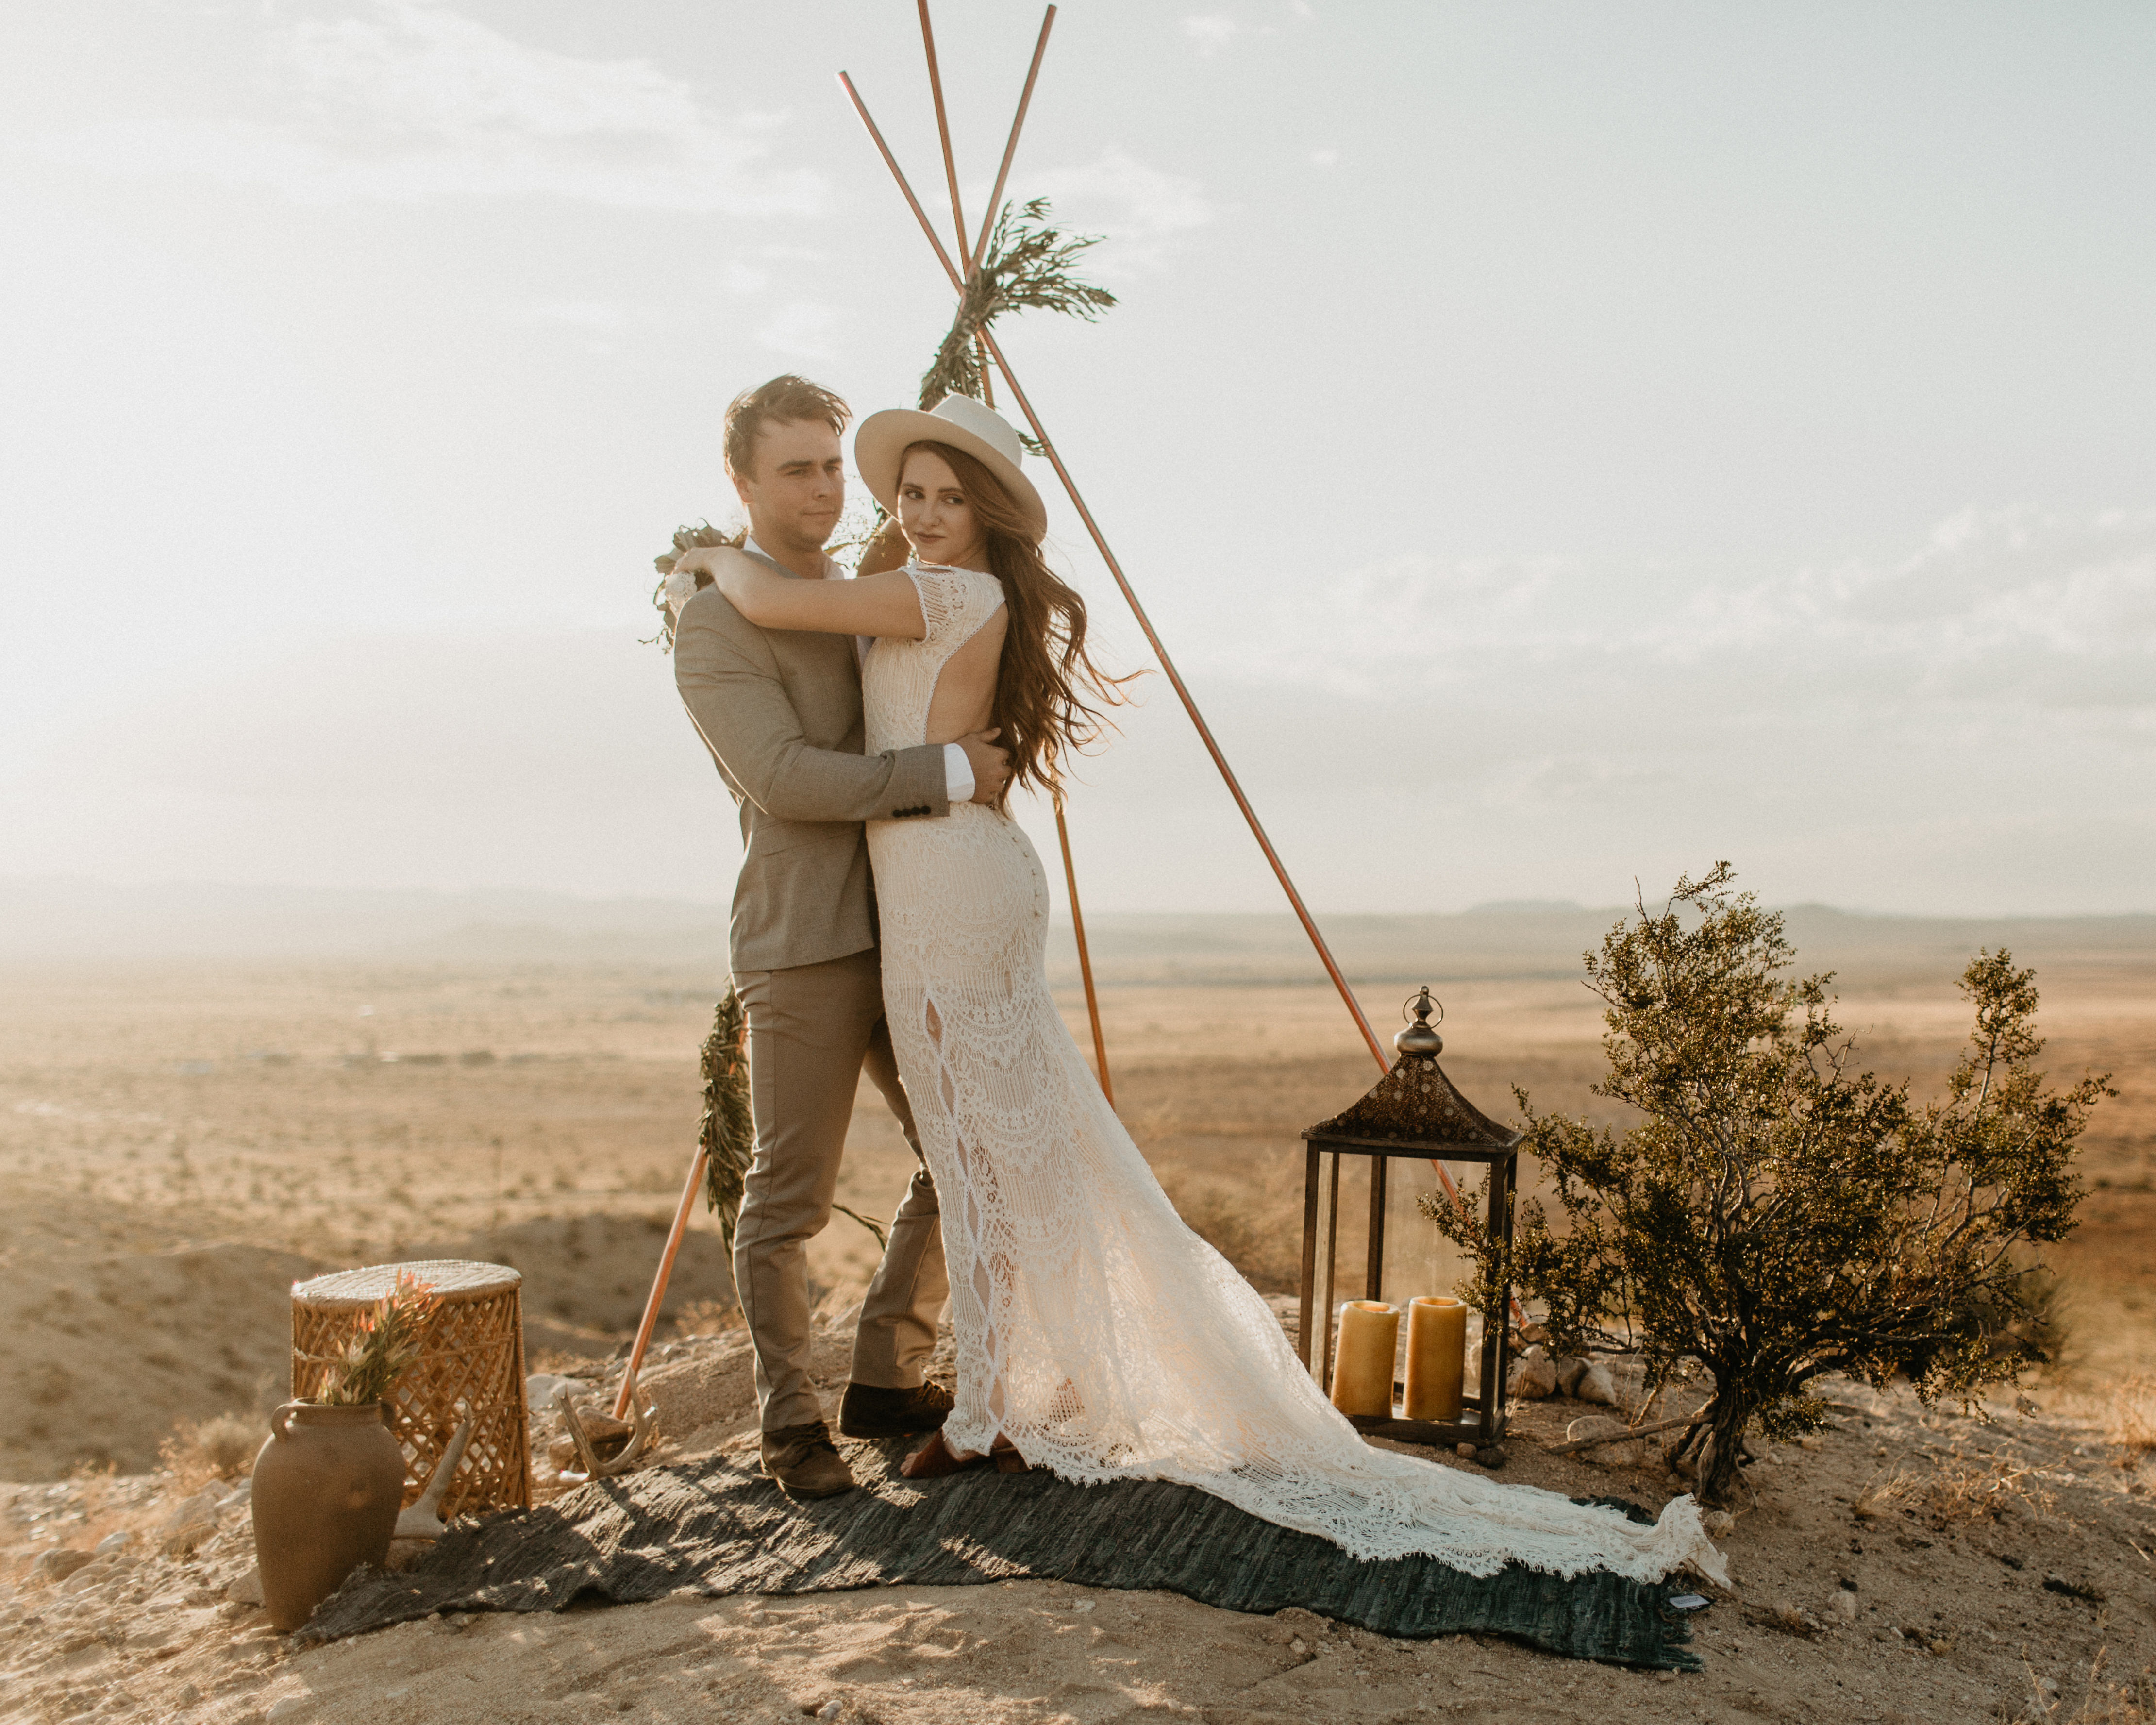 Western Bohemian wedding inspiration in Joshua Tree by Kadi Tobin